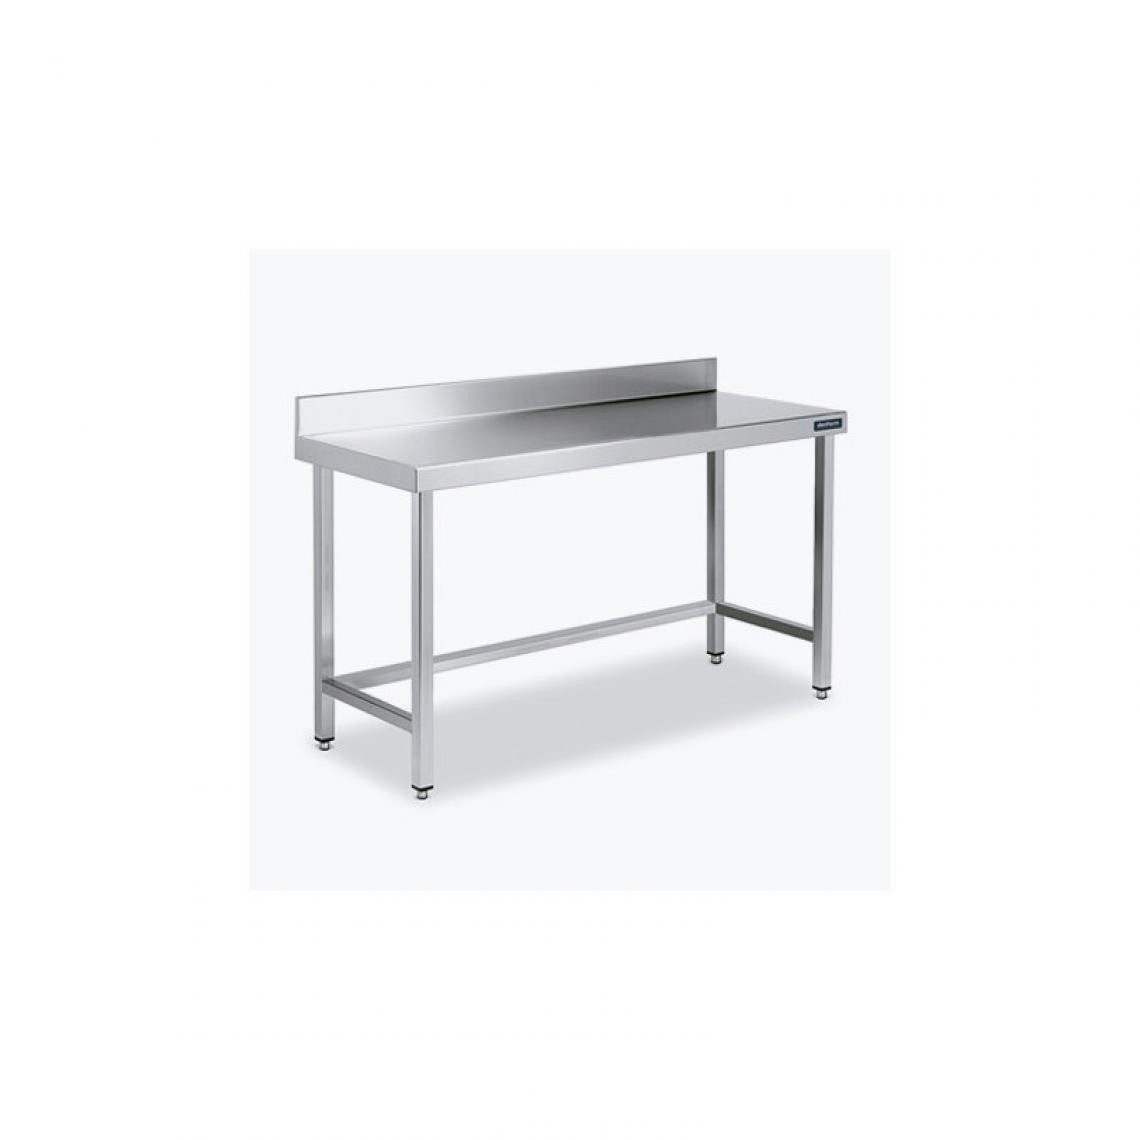 DISTFORM - Table Adossée 700x700 avec Renforts - Distform - Inox 18/101300x800x850mm - Tables à manger